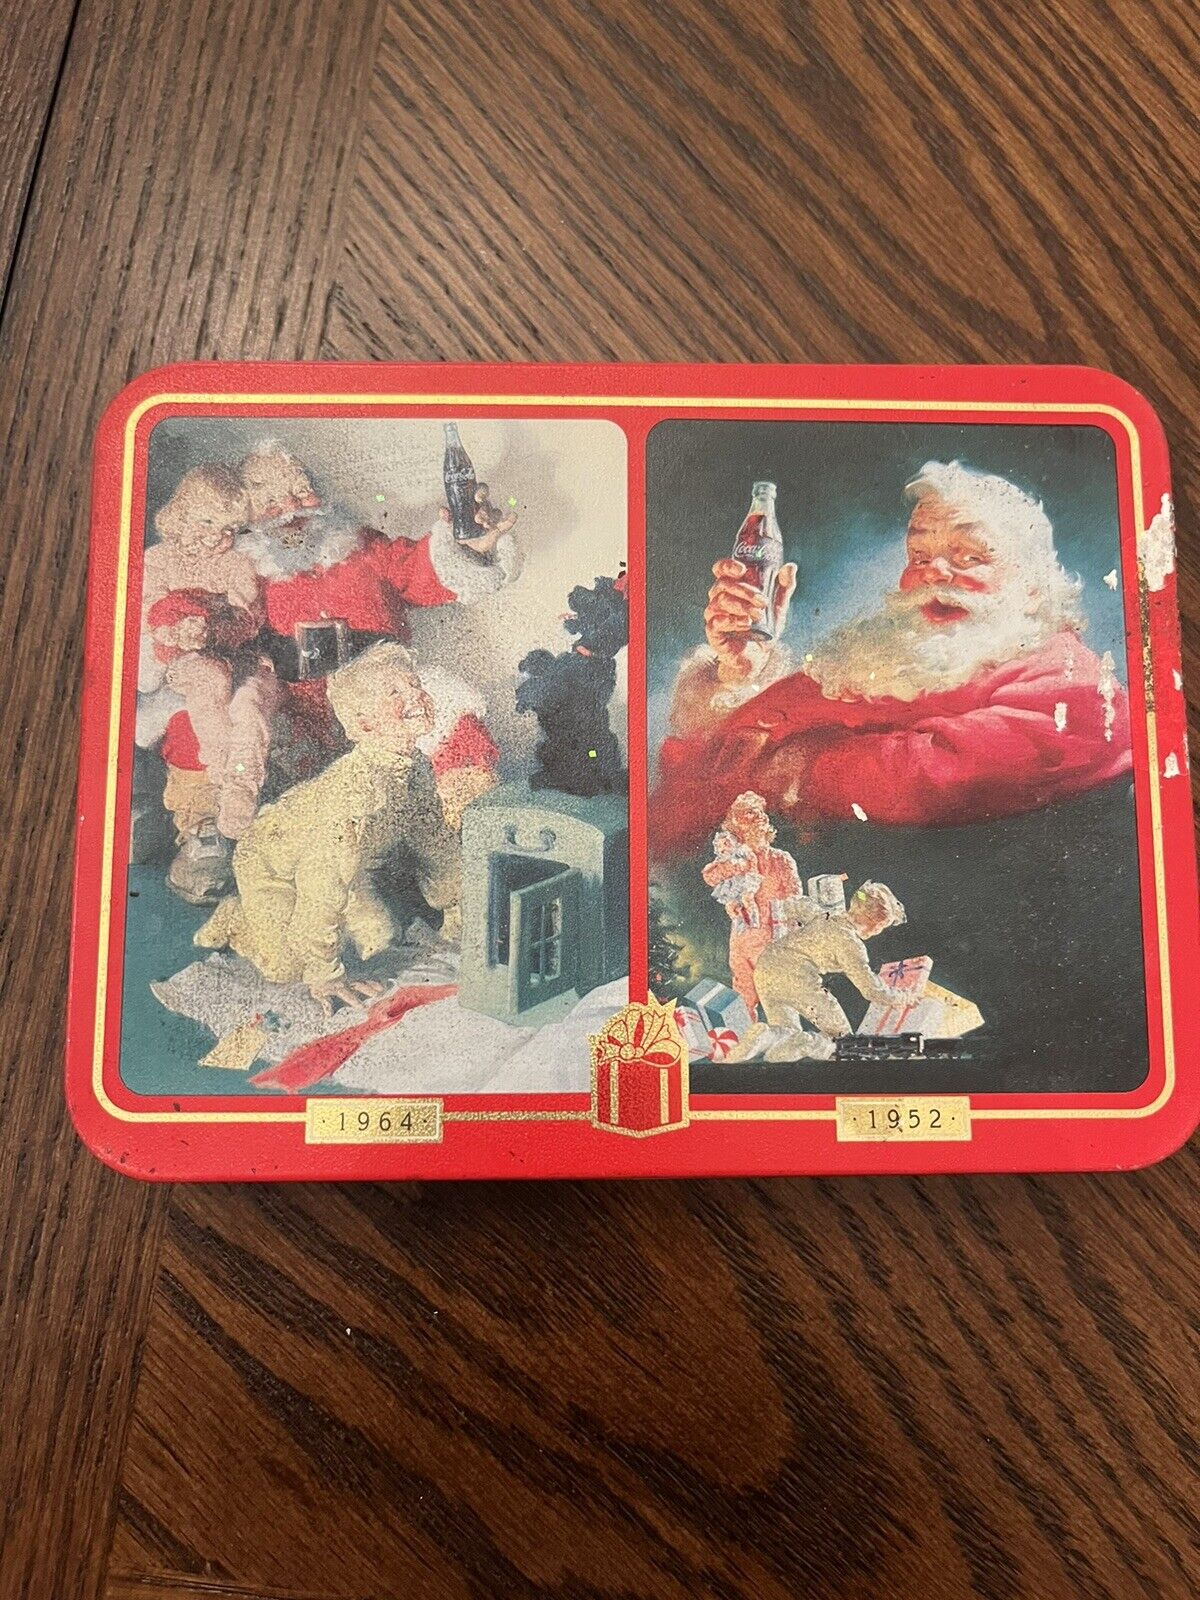 1996 Coca-Cola 1964/1952 Nostalgia Xmas Playing Cards 2 Sealed Decks Santa Claus